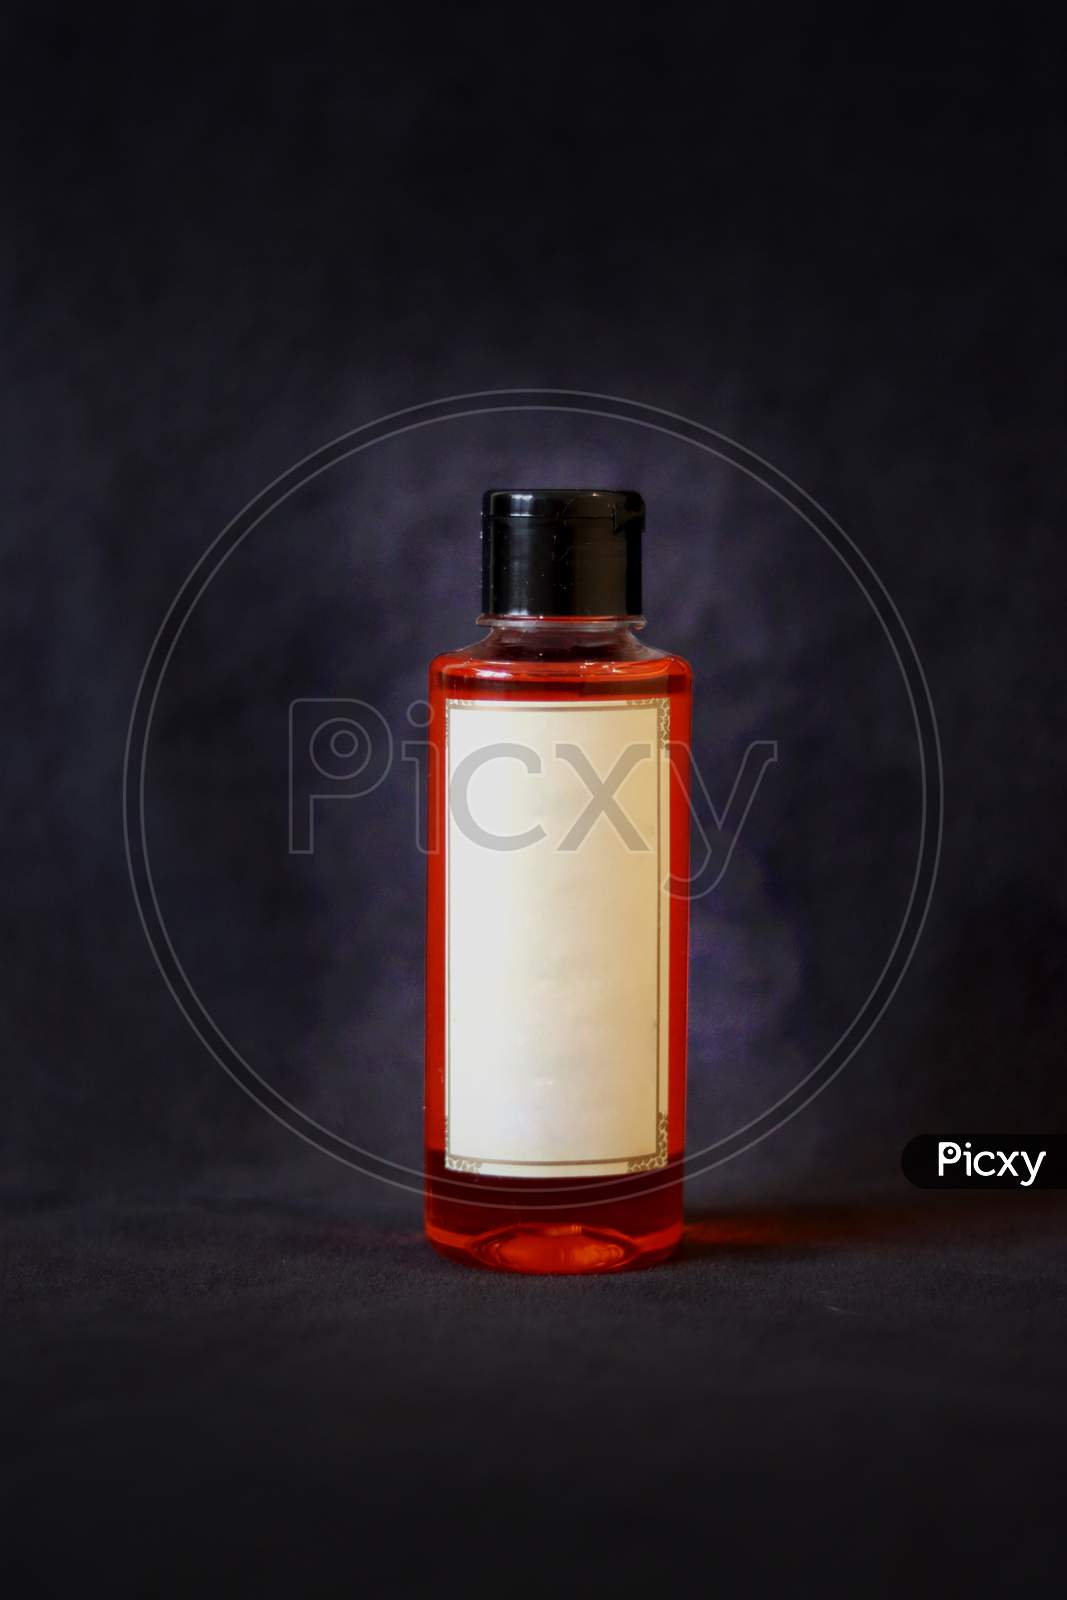 Orange Oil Bottle With Off White Label And Black Bottle Cap On Dark Grey Textured Background.